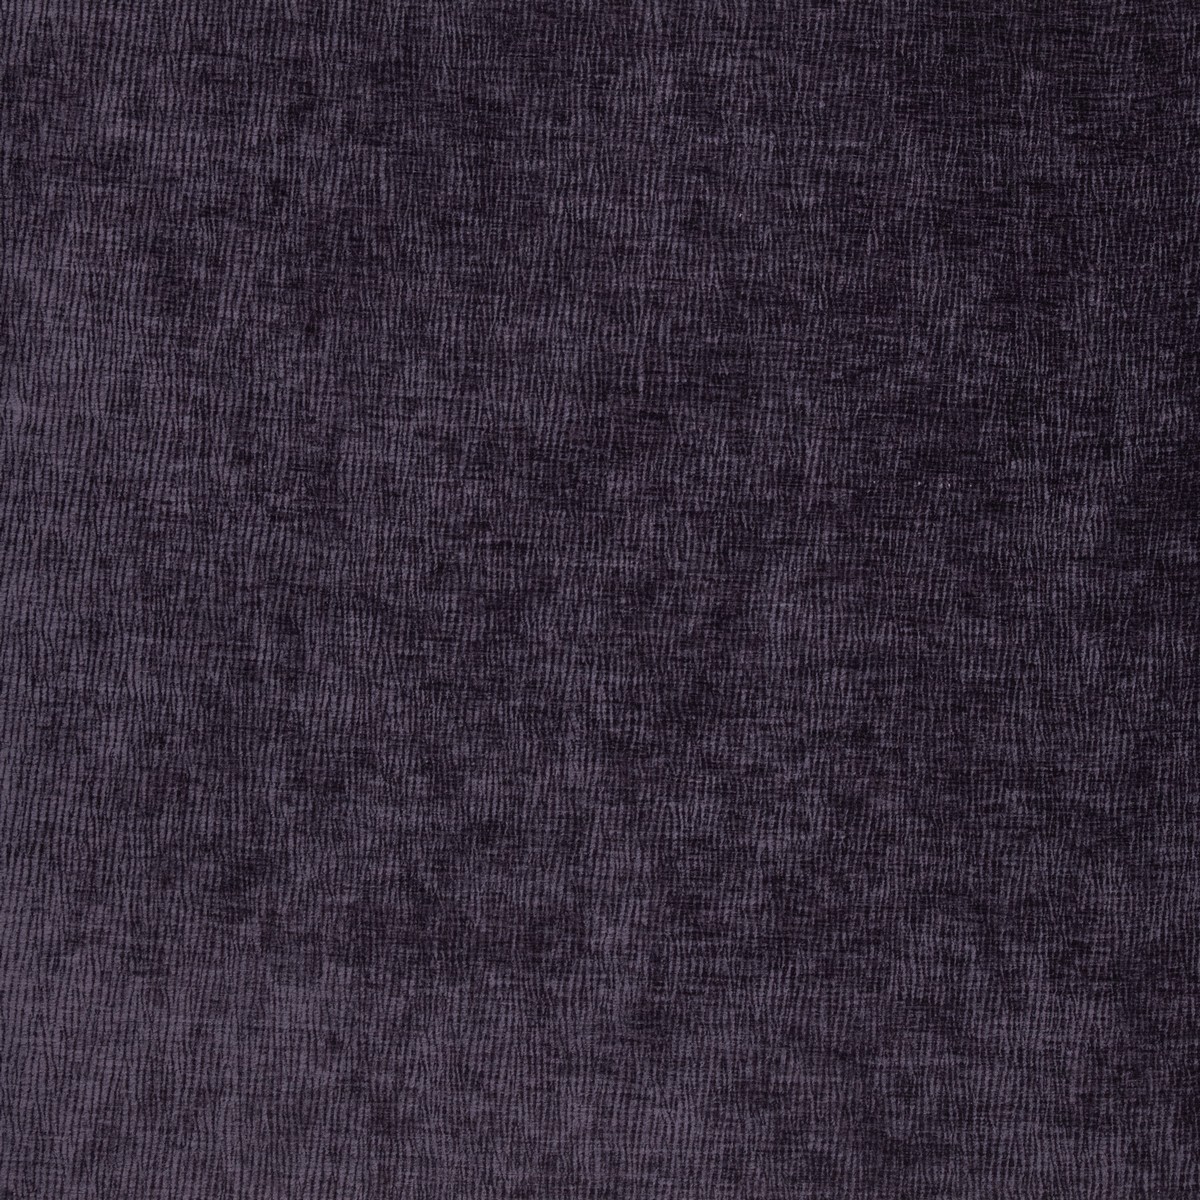 Tresco Blackberry Fabric by iLiv